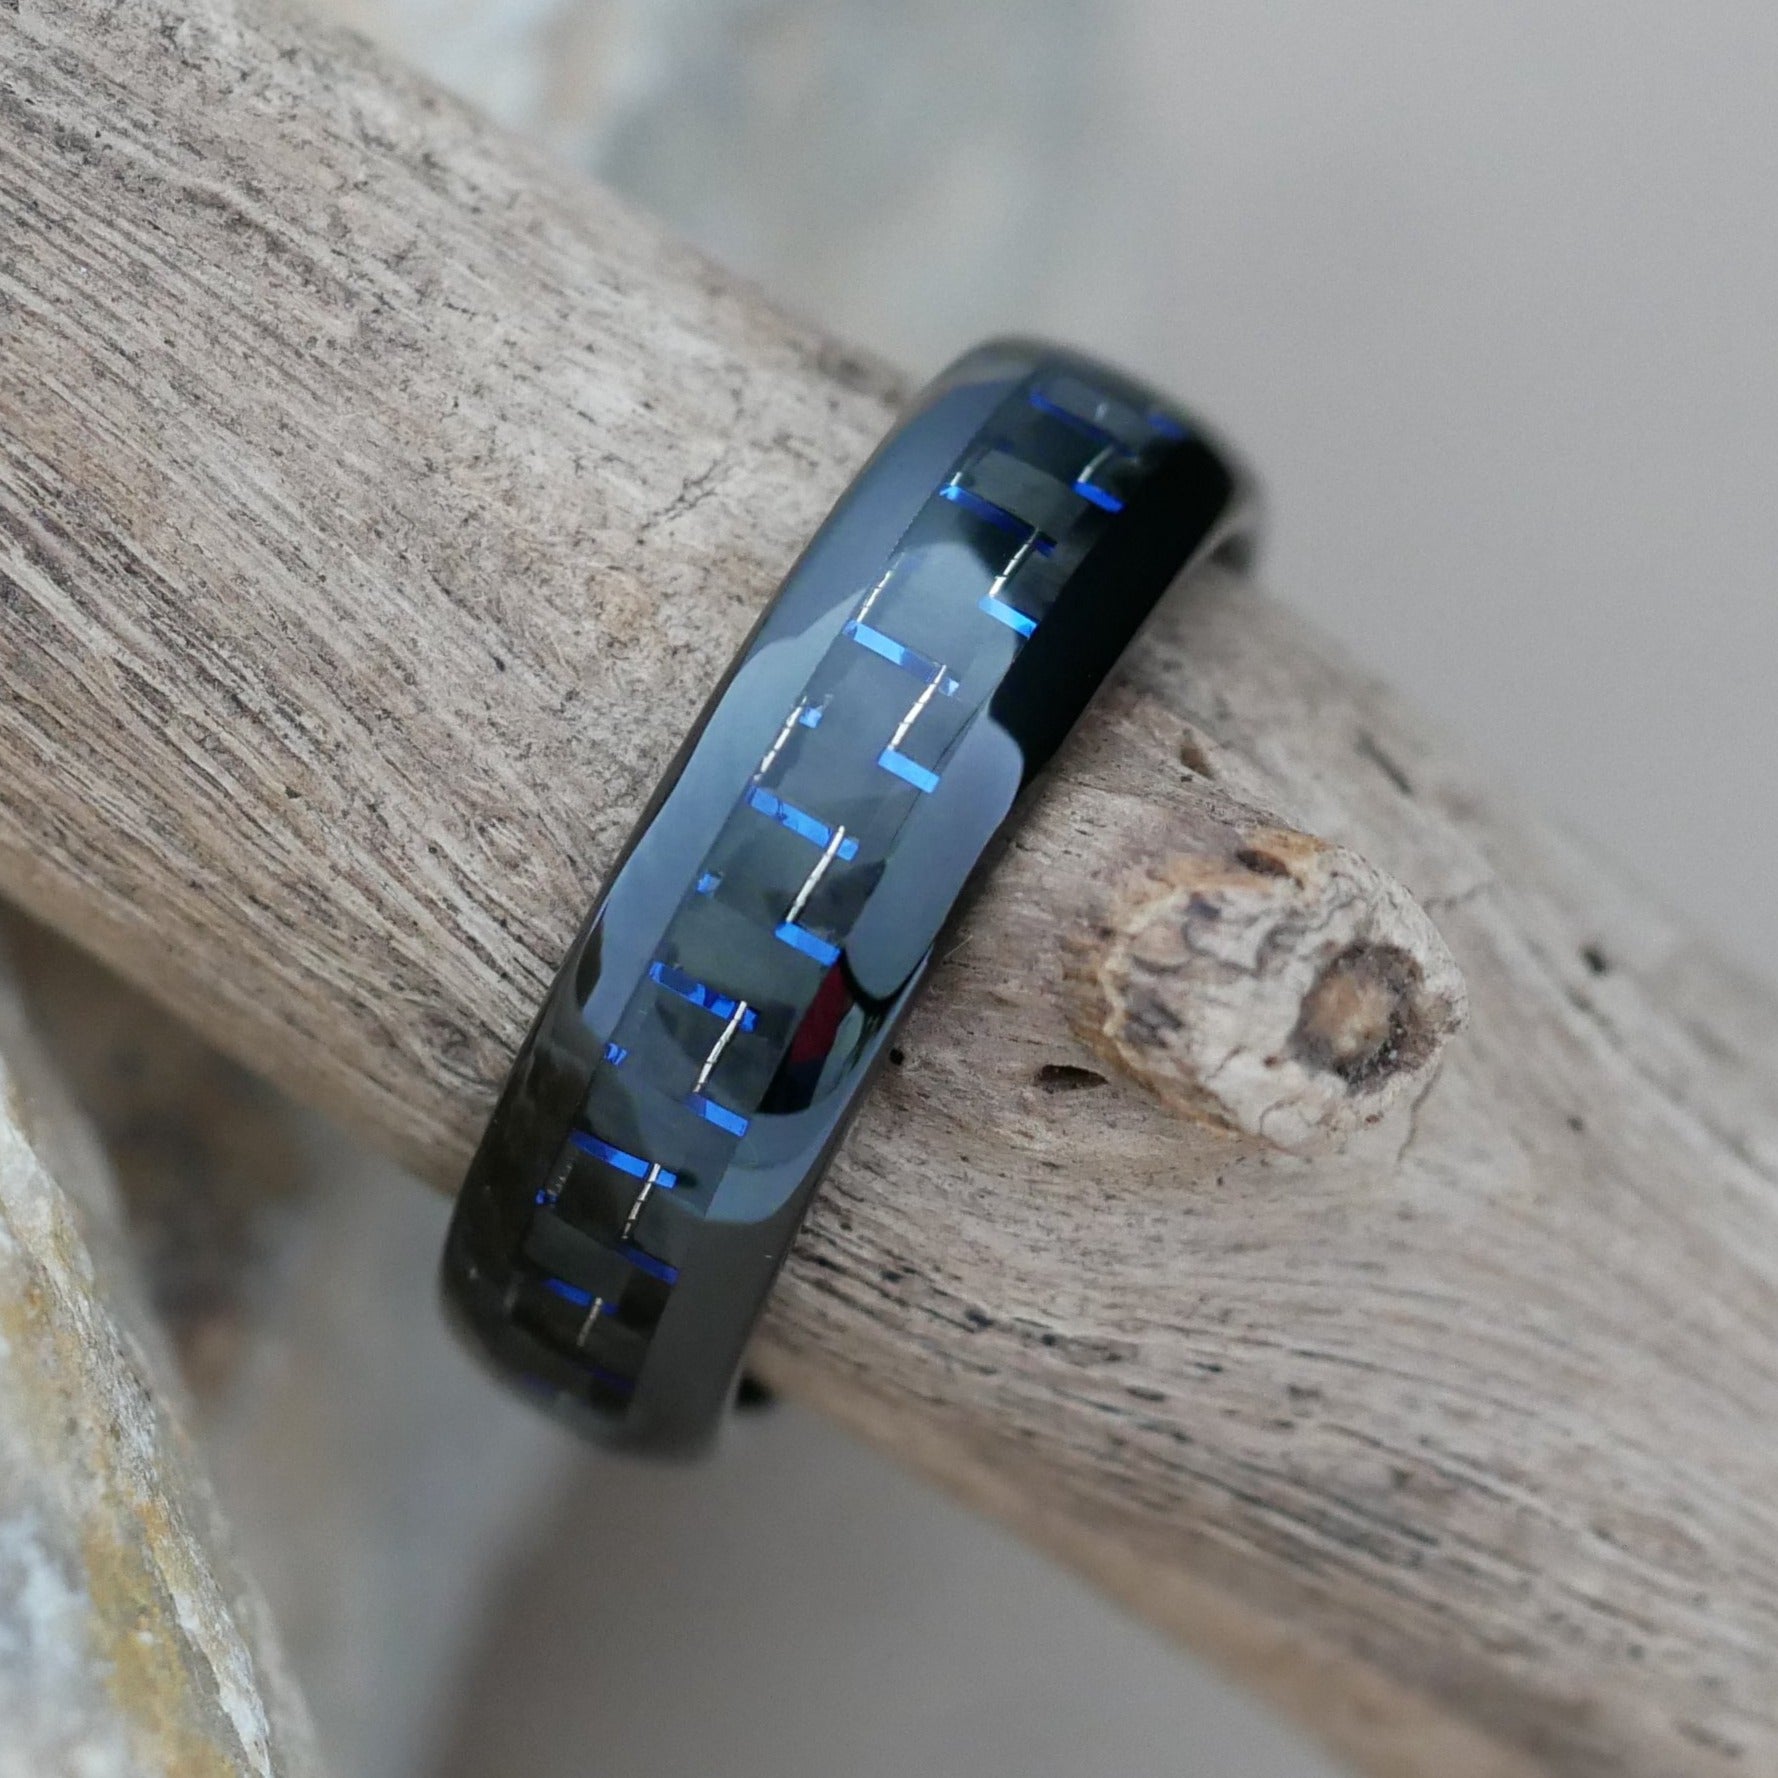 Men's Black Tungsten Ring with Blue Carbon Fiber